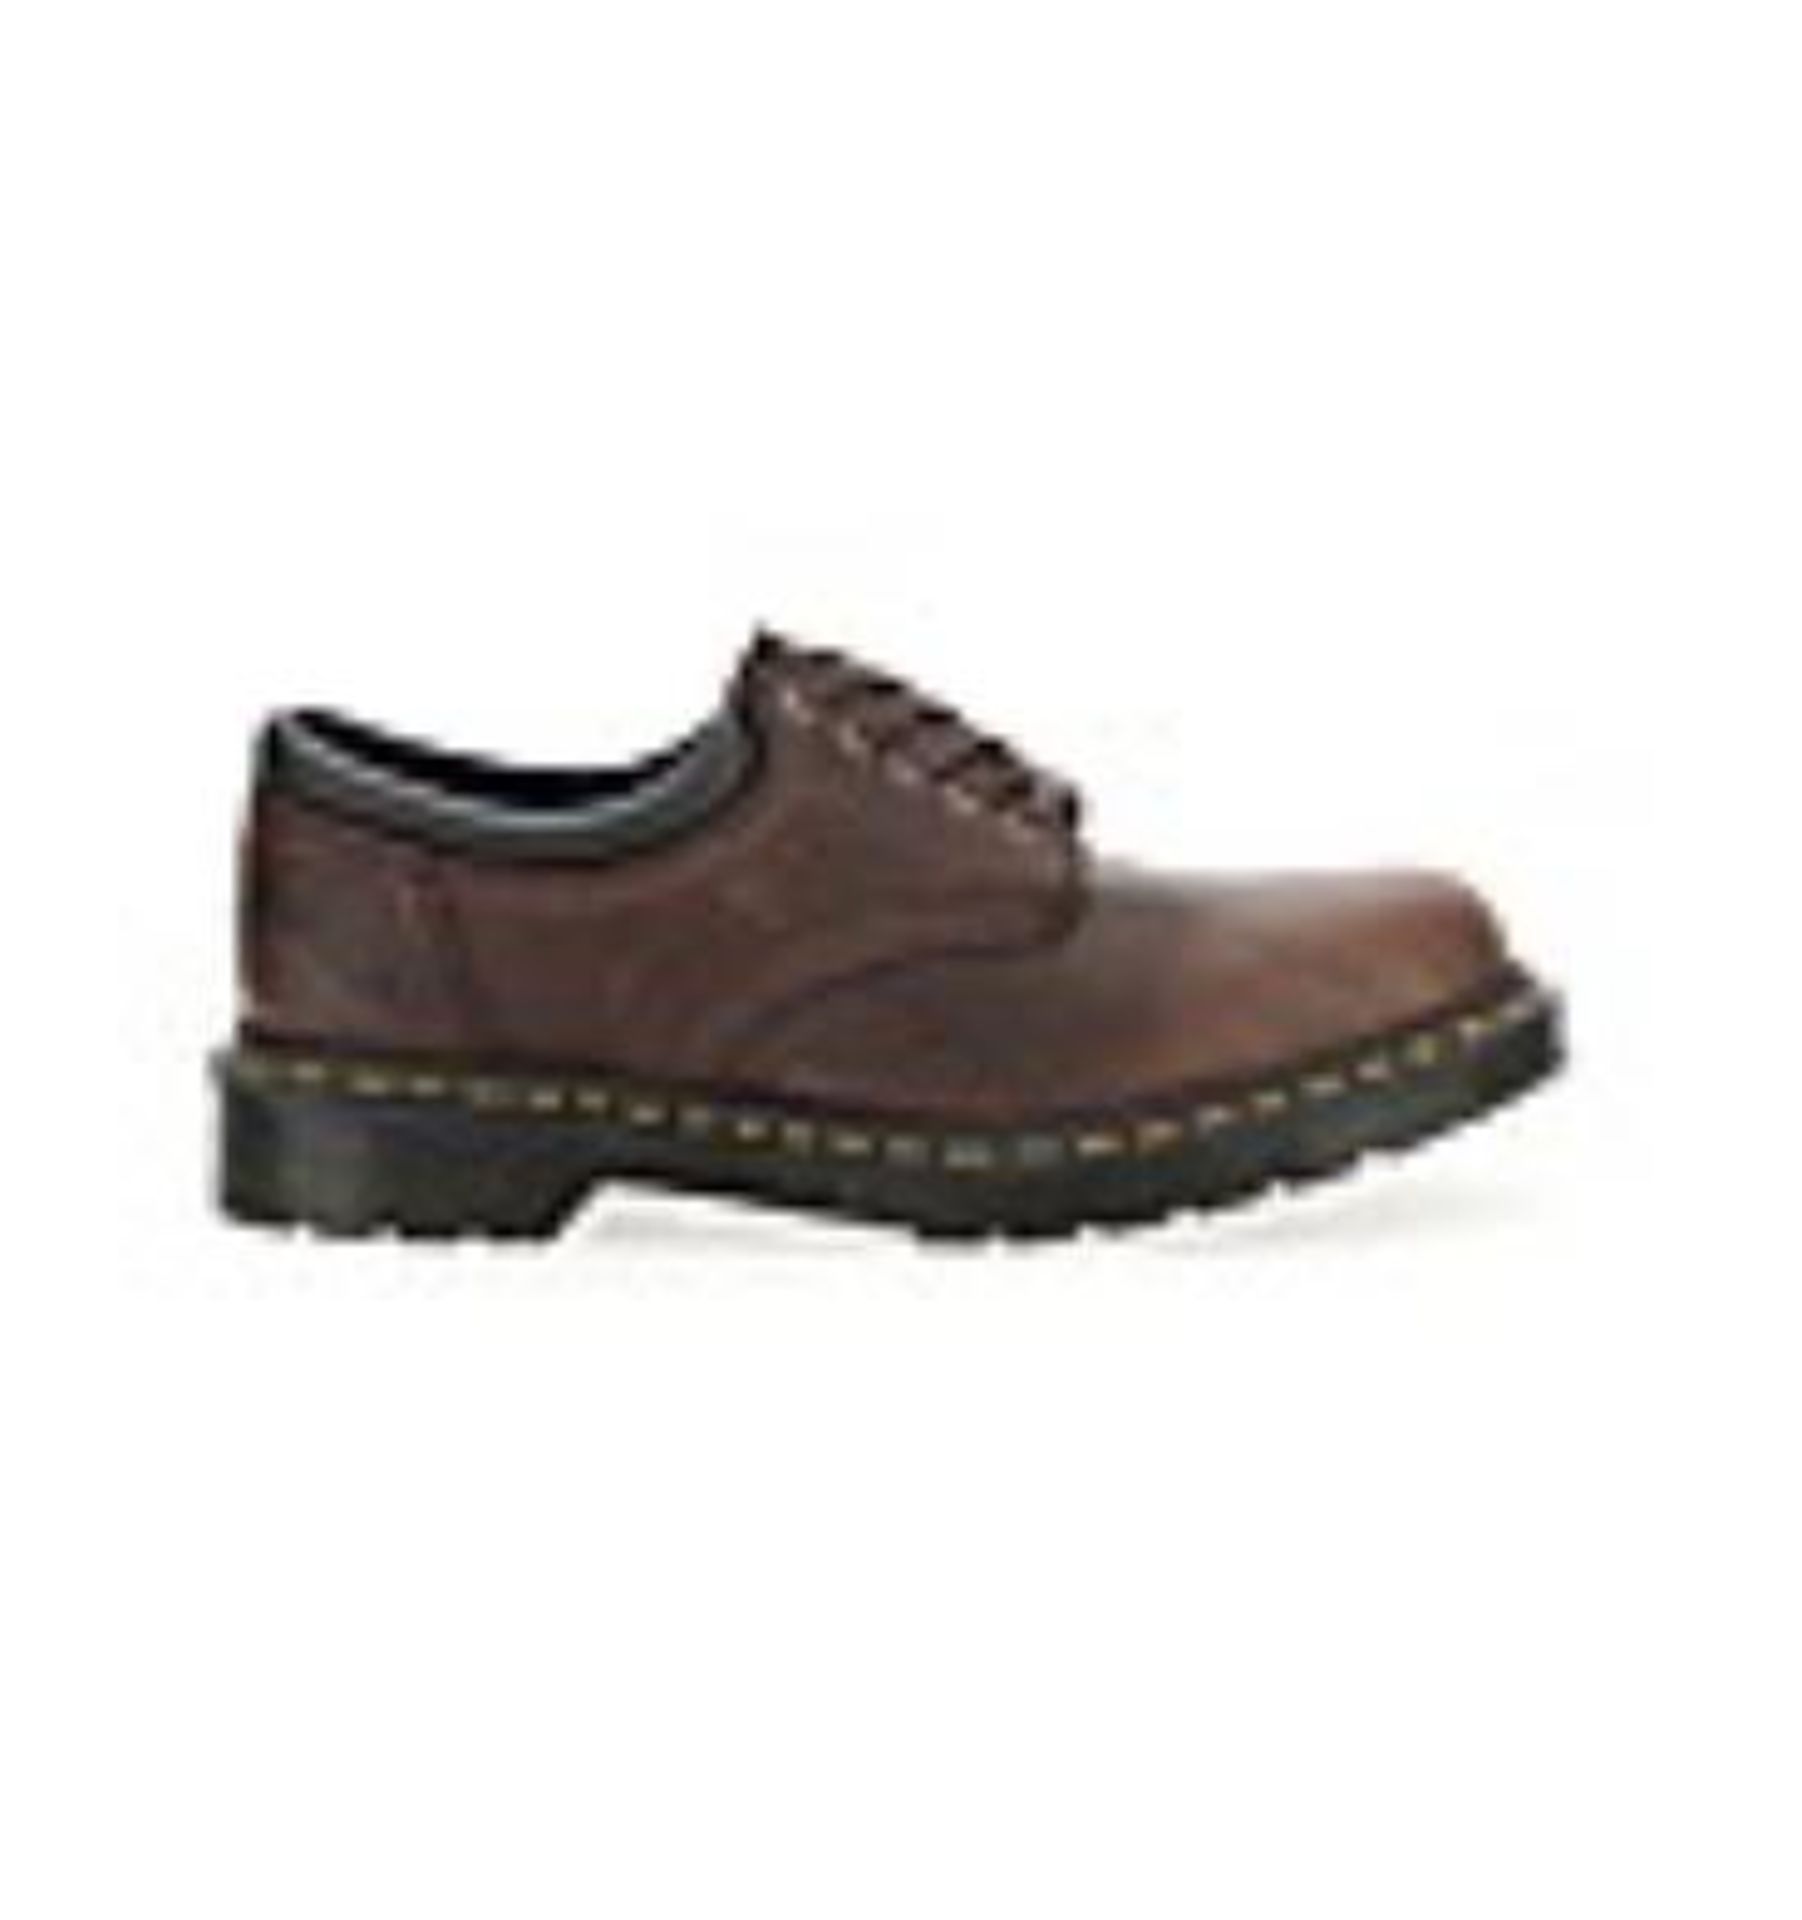 + VAT Brand New Pair Gents Dr Martens 8053 Brown Shoes Size 12